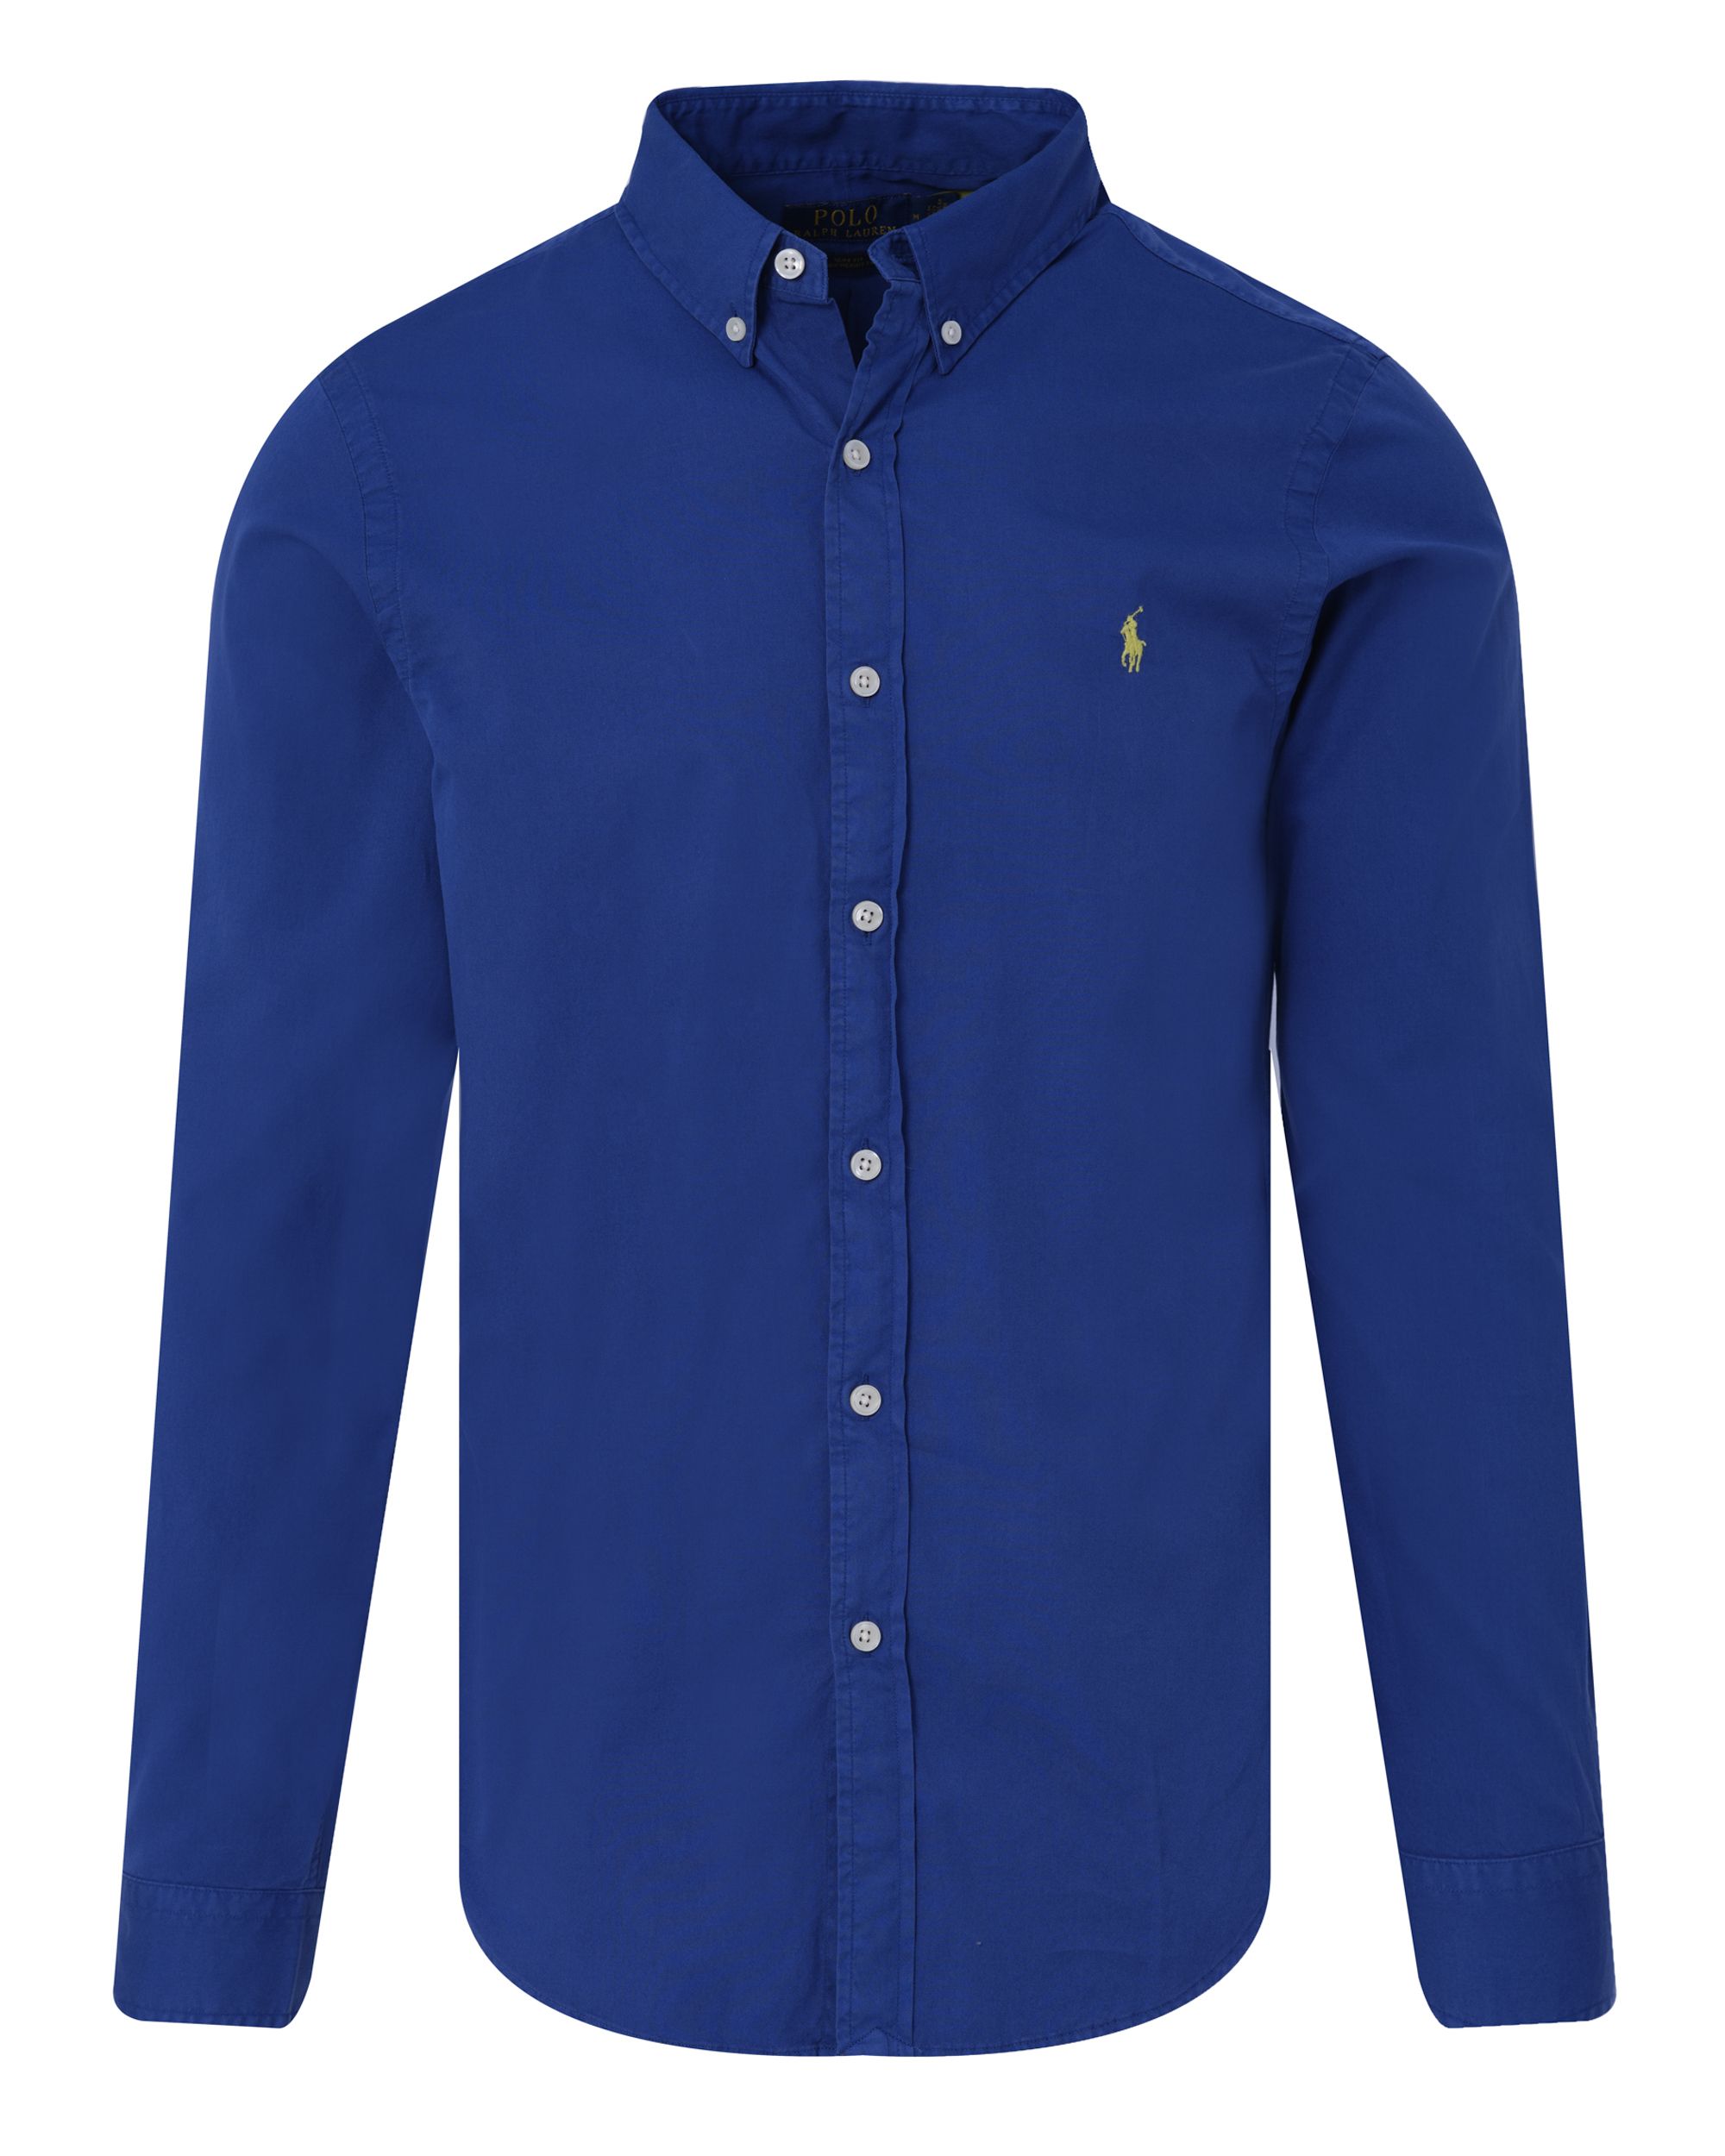 Polo Ralph Lauren Casual Overhemd LM Blauw 091544-001-L